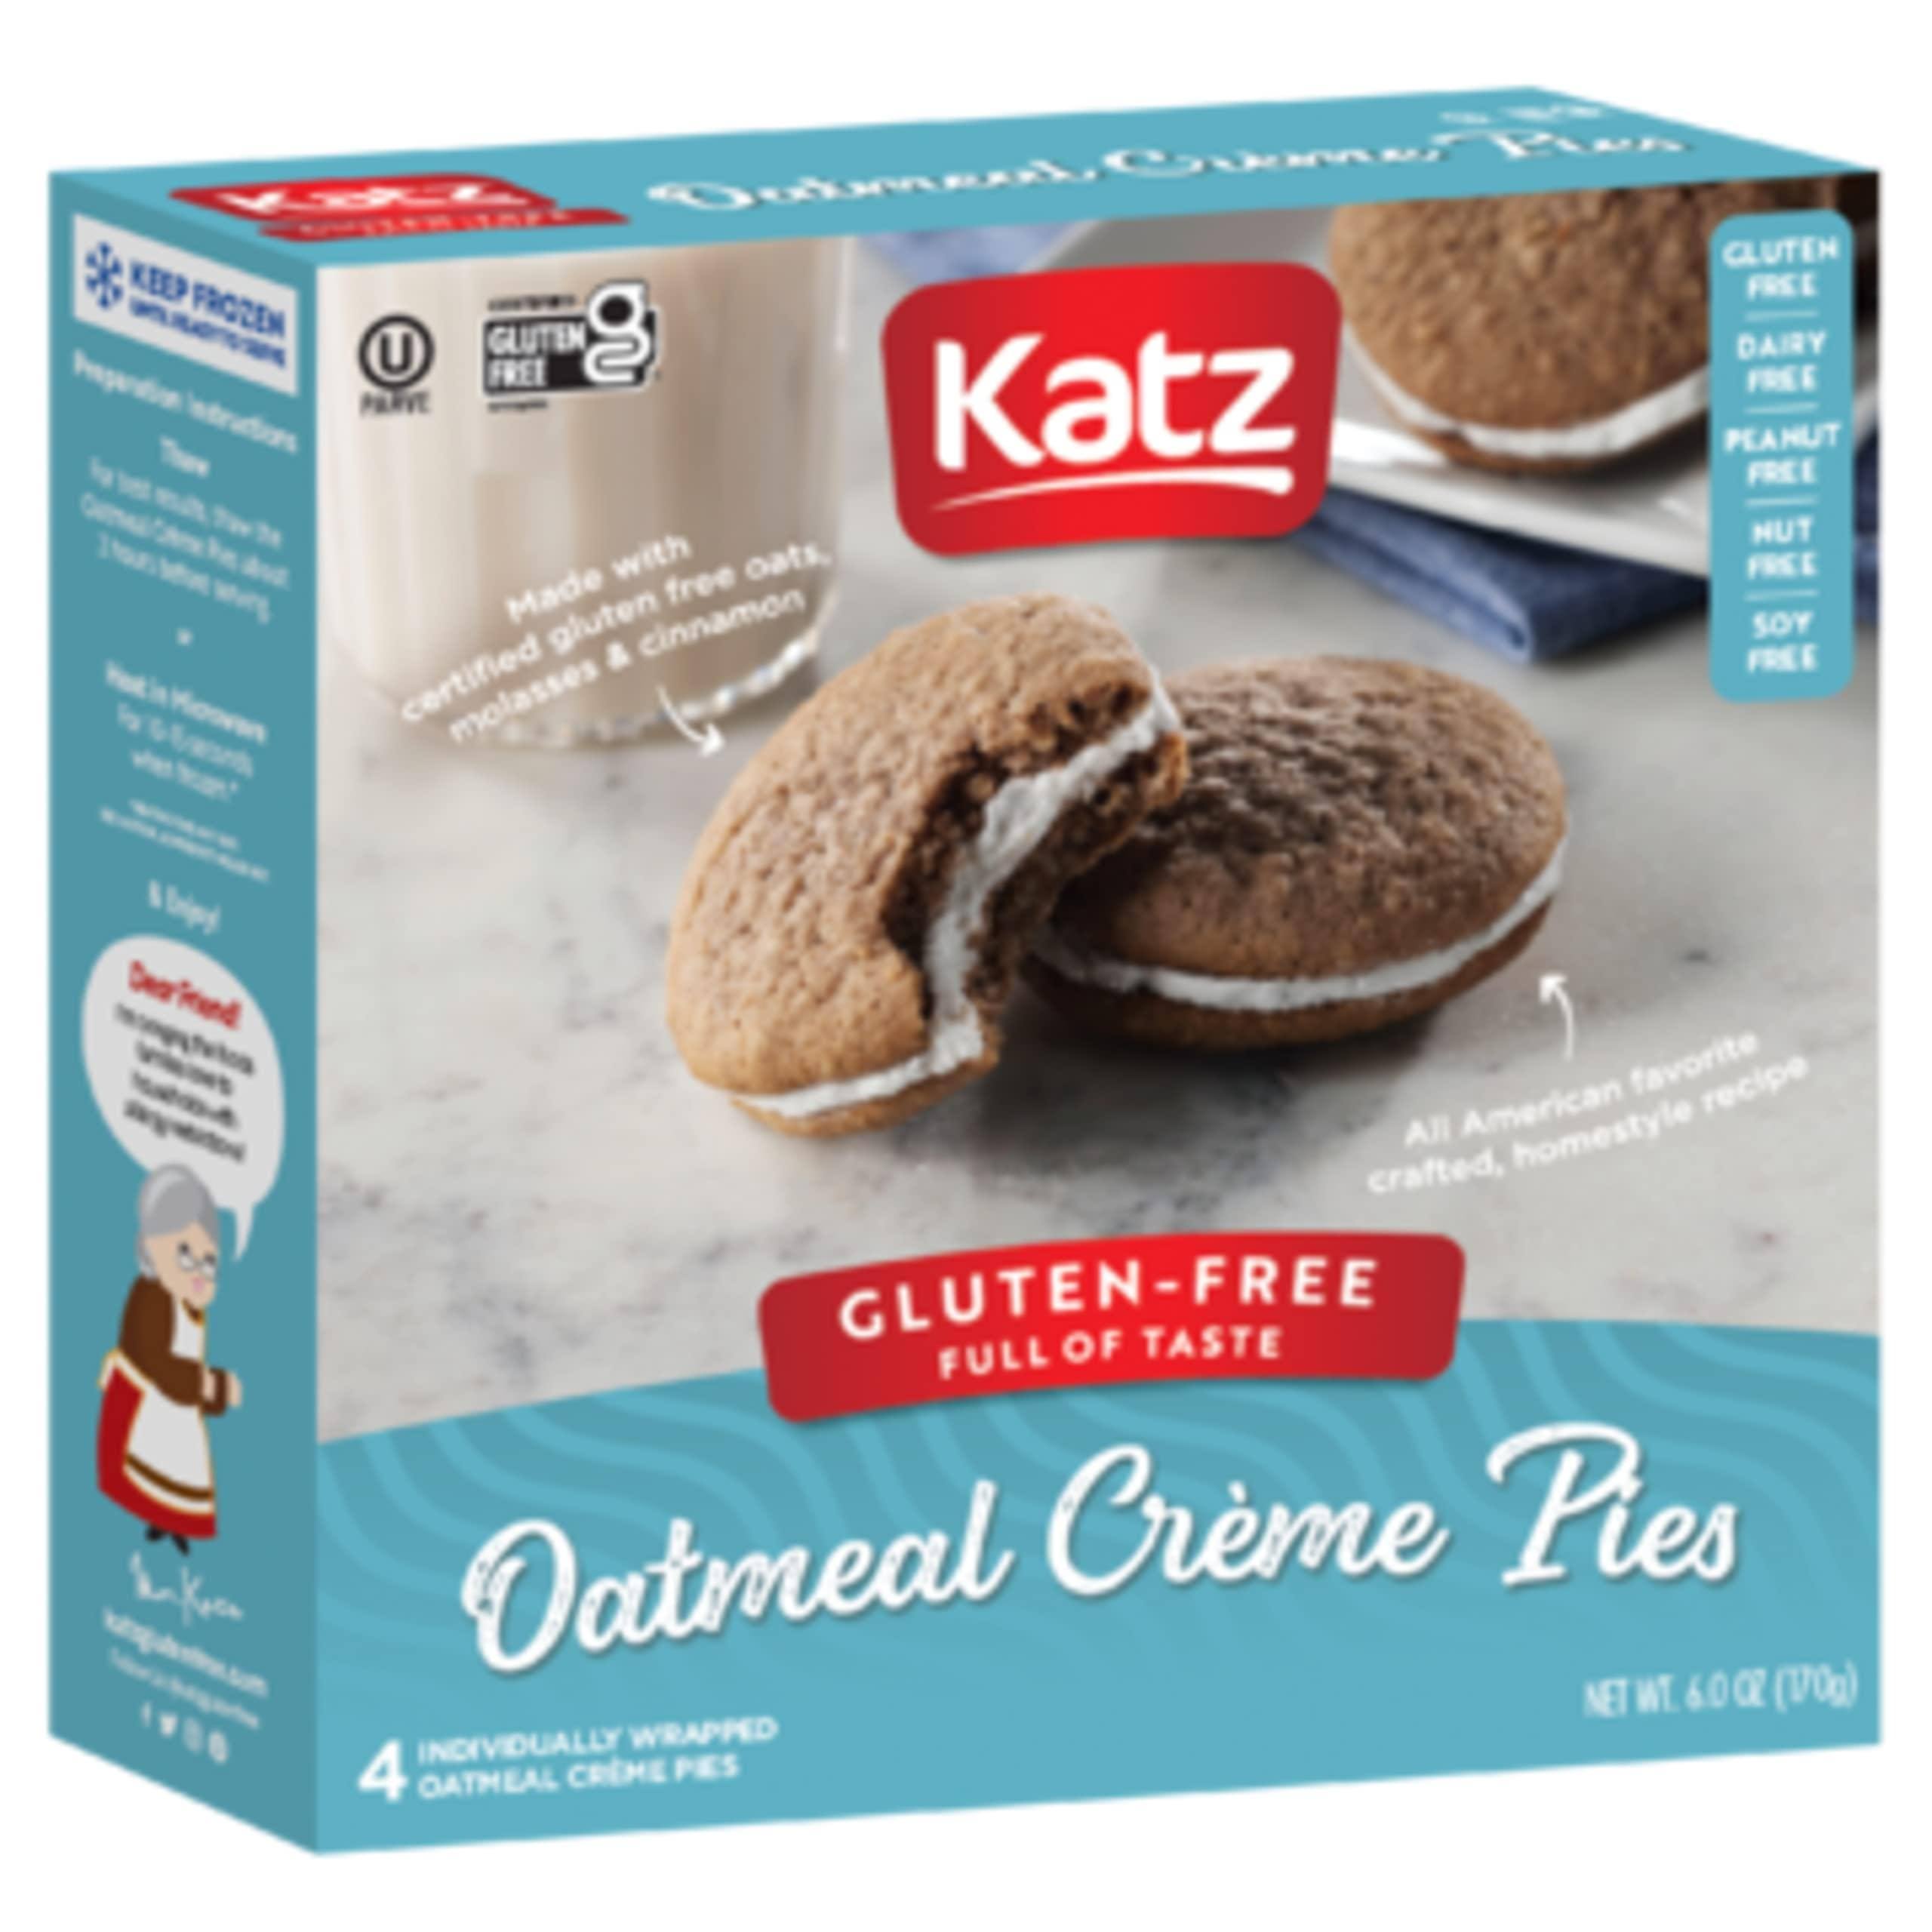 Katz Gluten Free Oatmeal Crme Pie Pack of 1